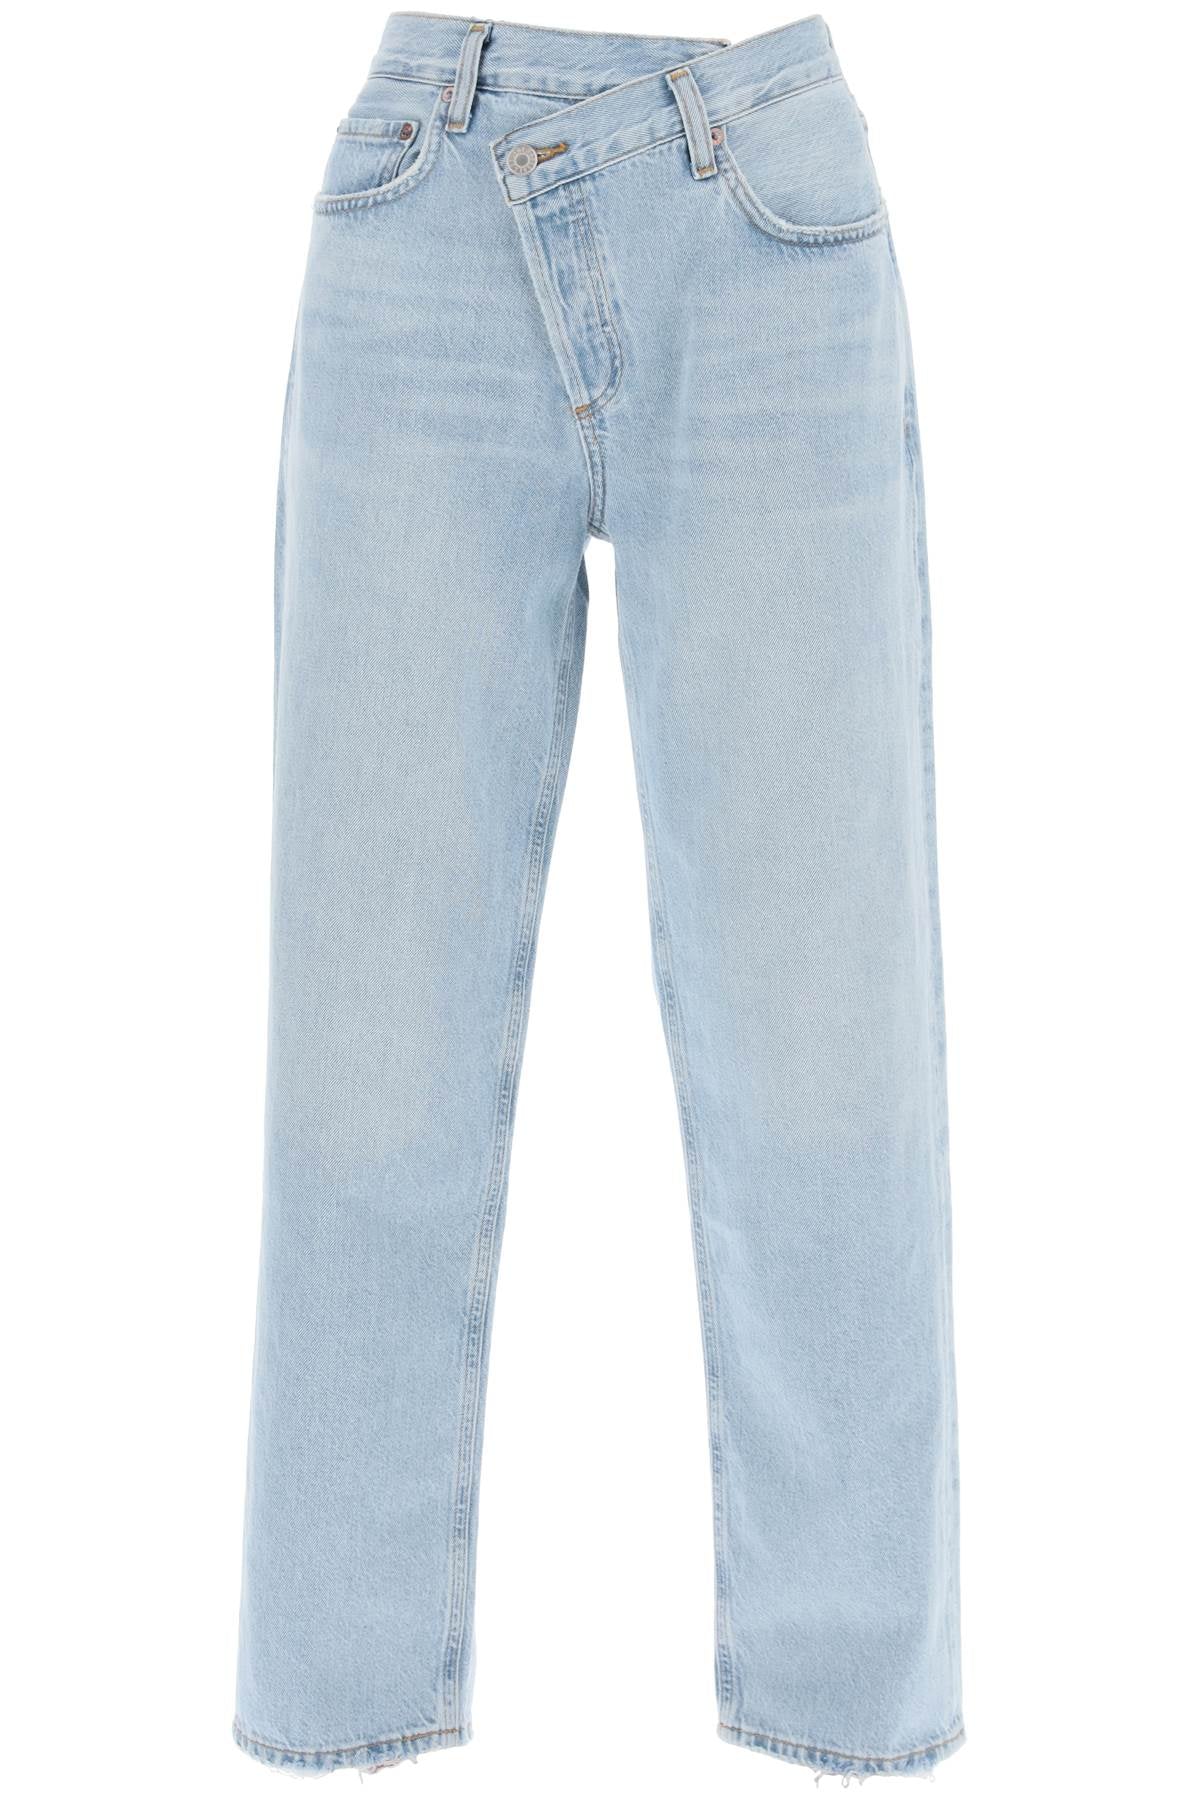 Agolde criss cross jeans-0